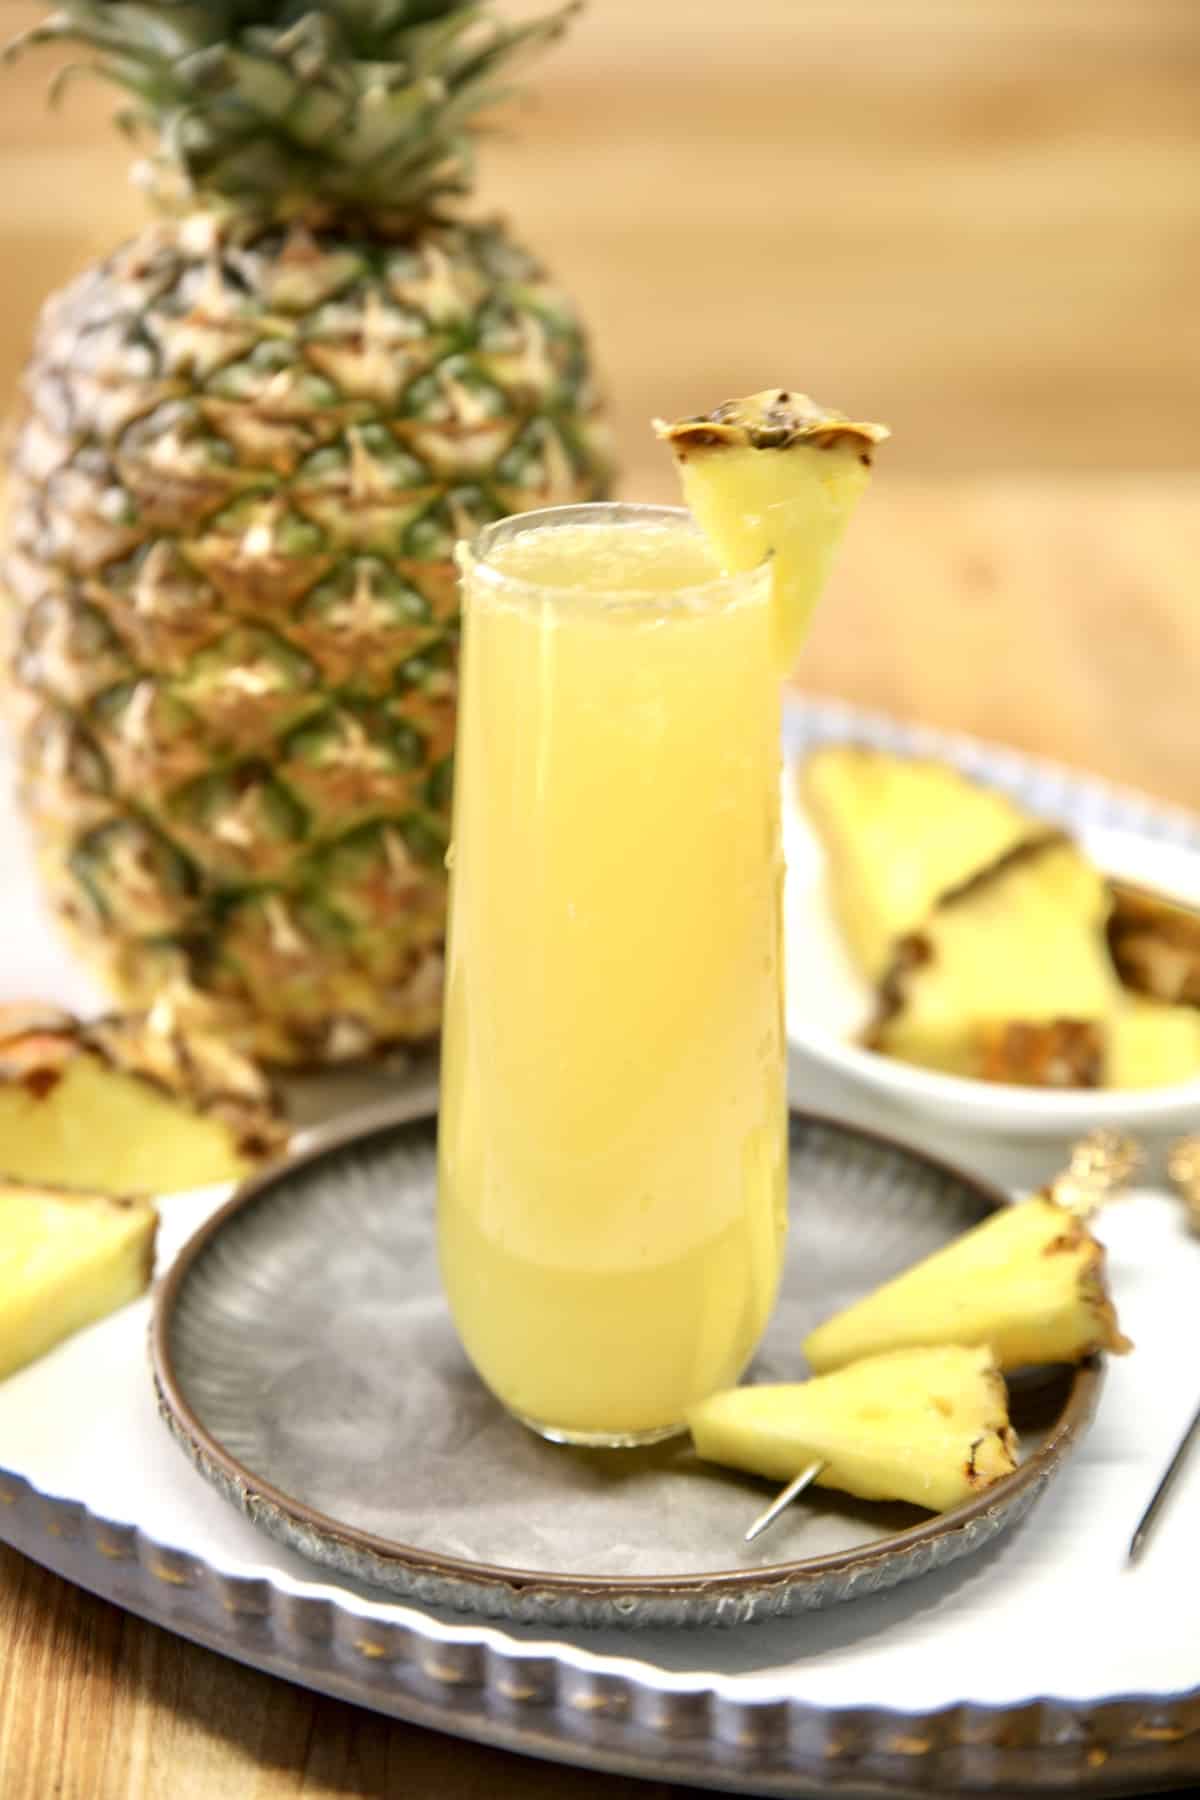 Pineapple mimosa with pineapple garnish.